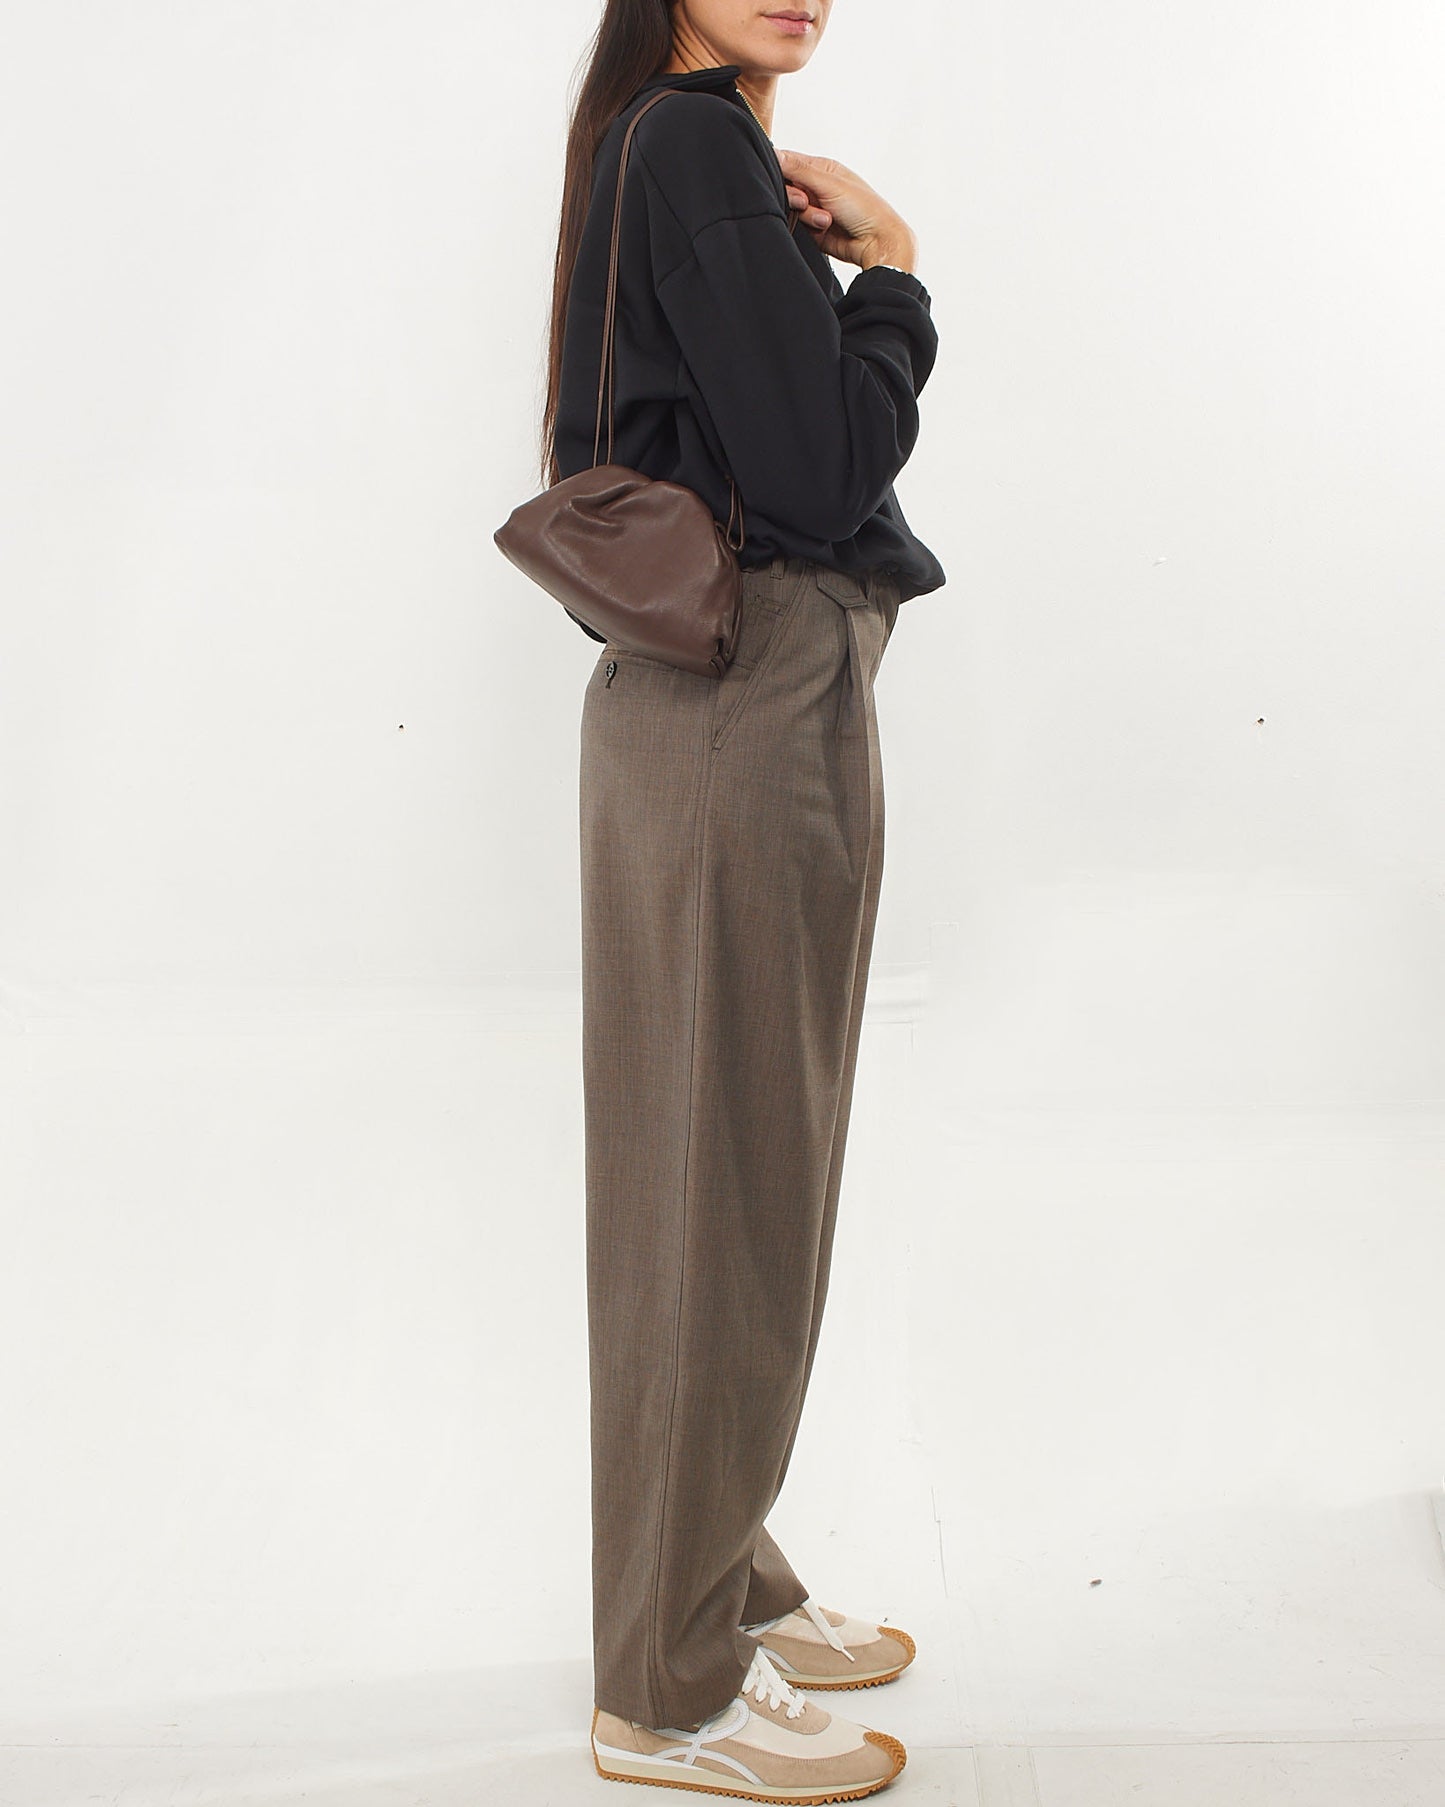 Bottega Veneta Brown "Fondant" Leather Mini Pouch with Adjustable Strap